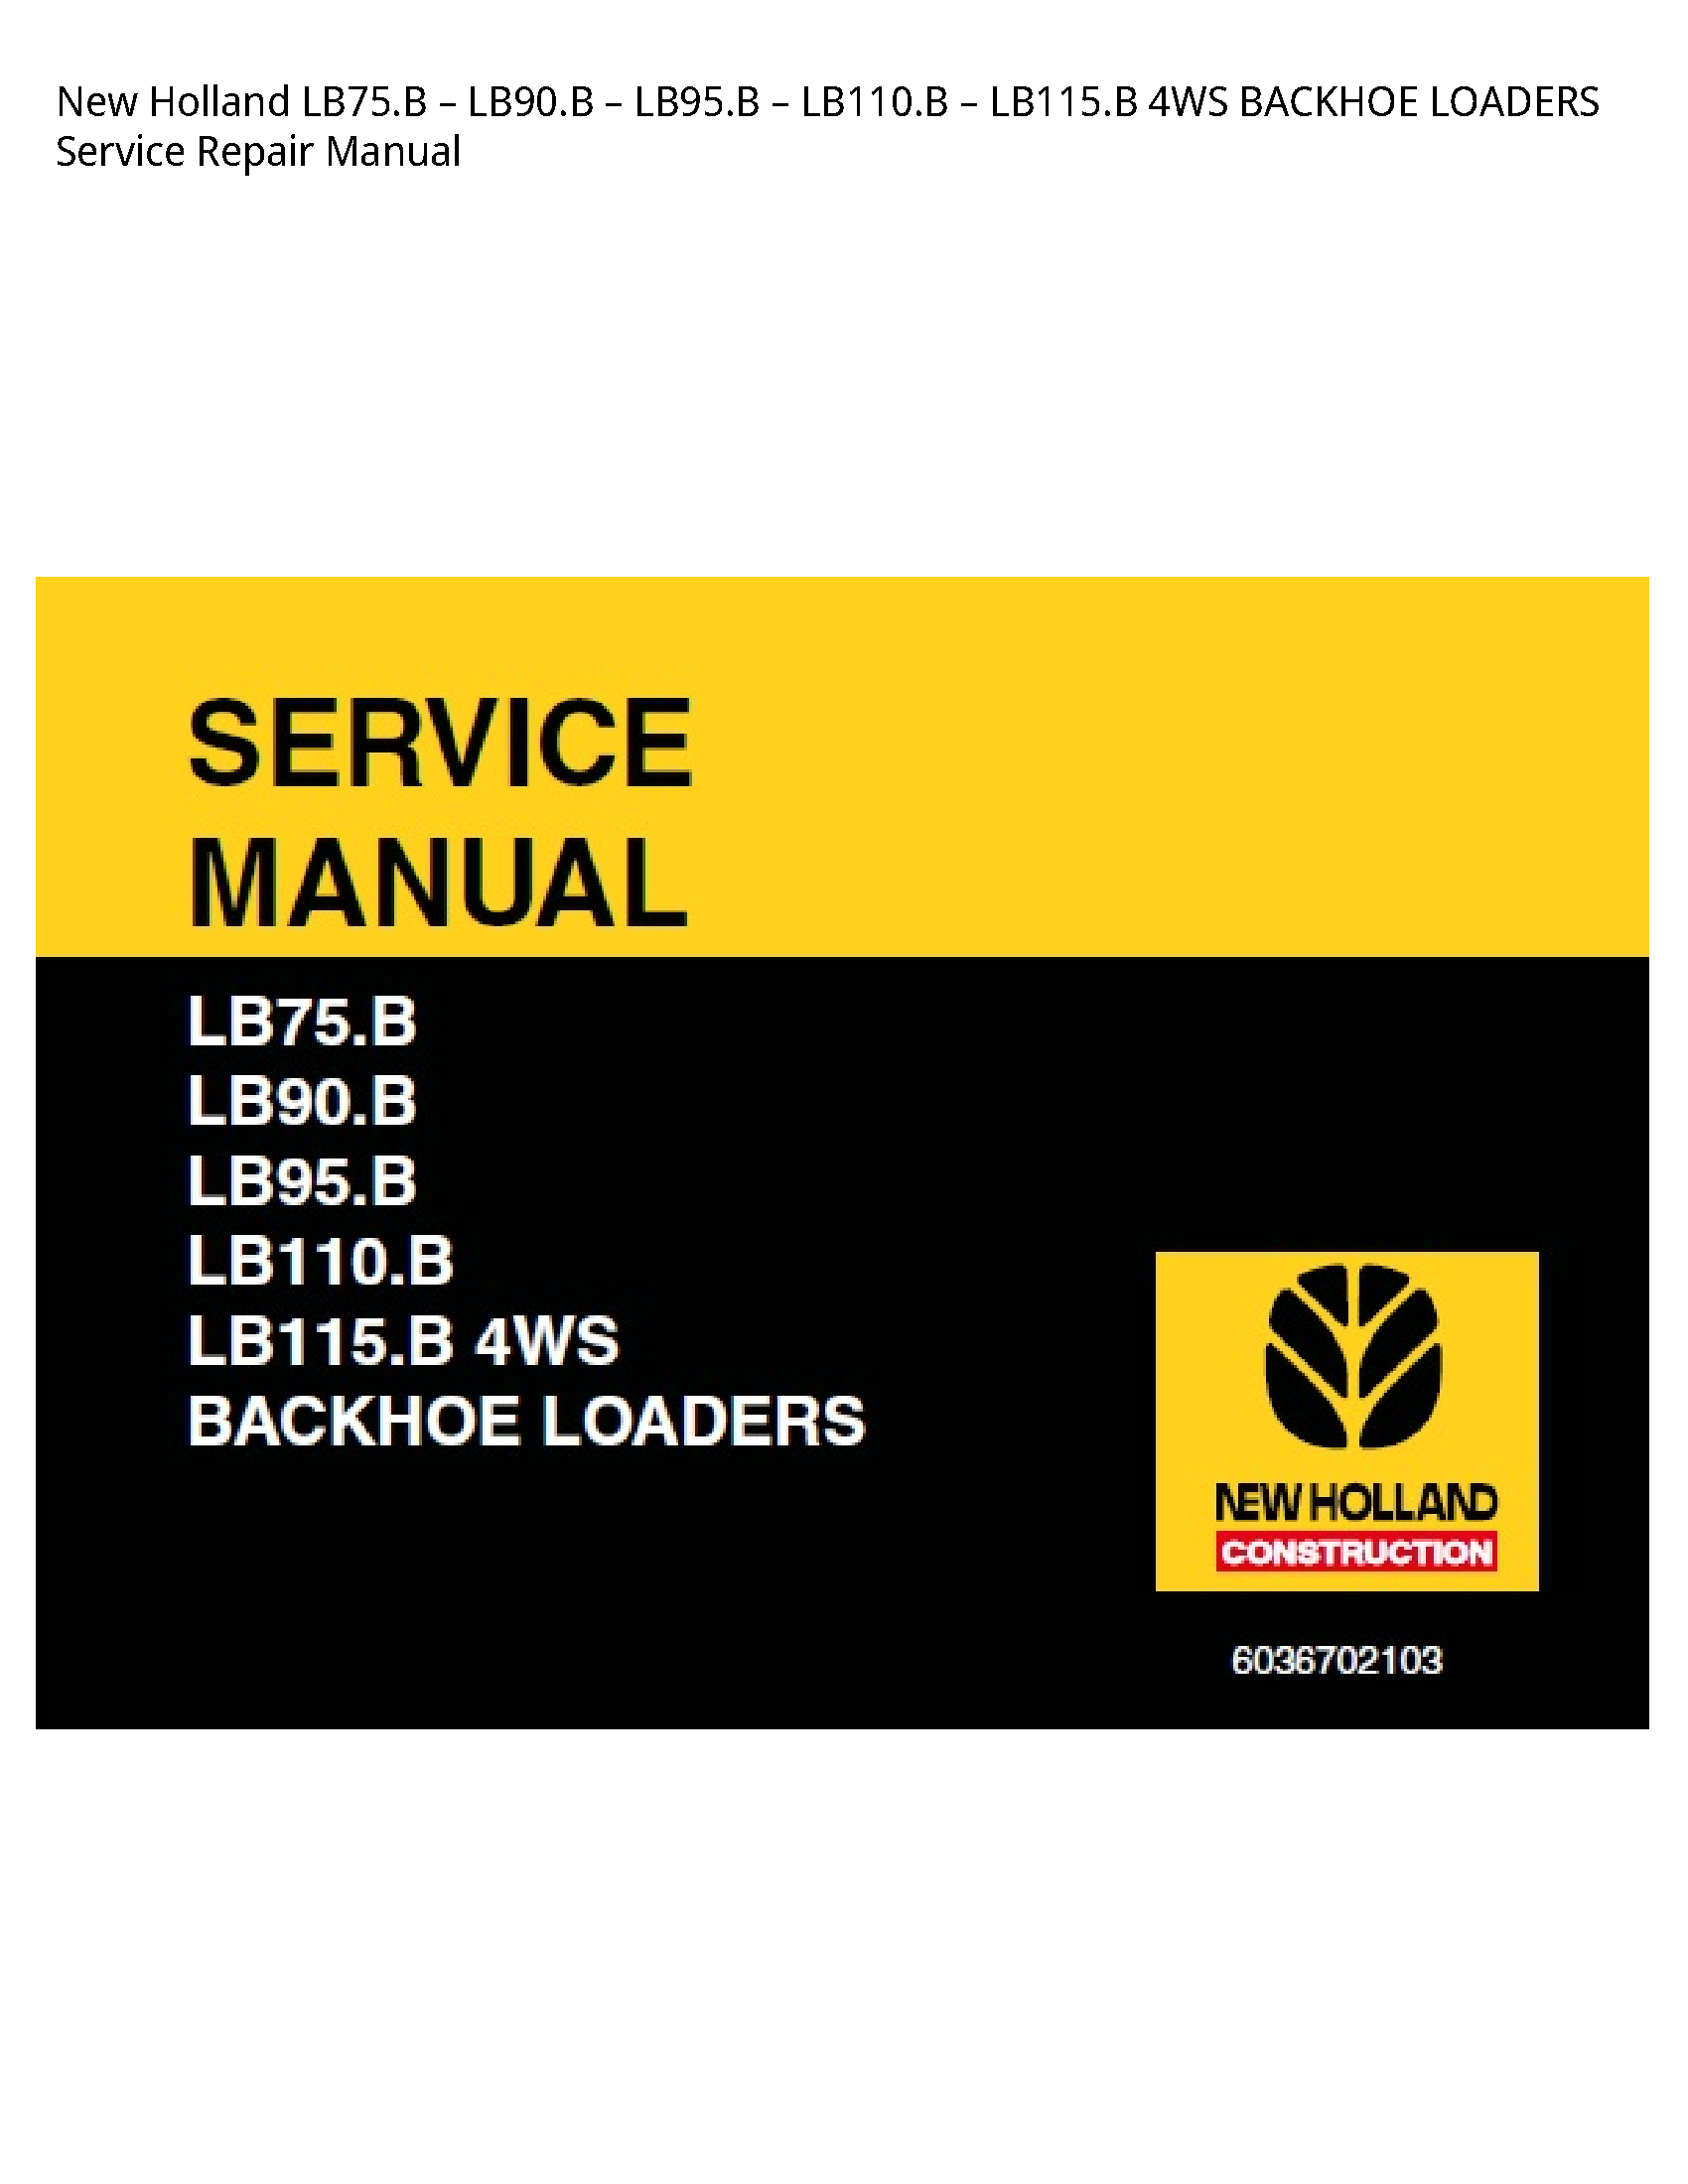 New Holland LB75.B BACKHOE LOADERS manual